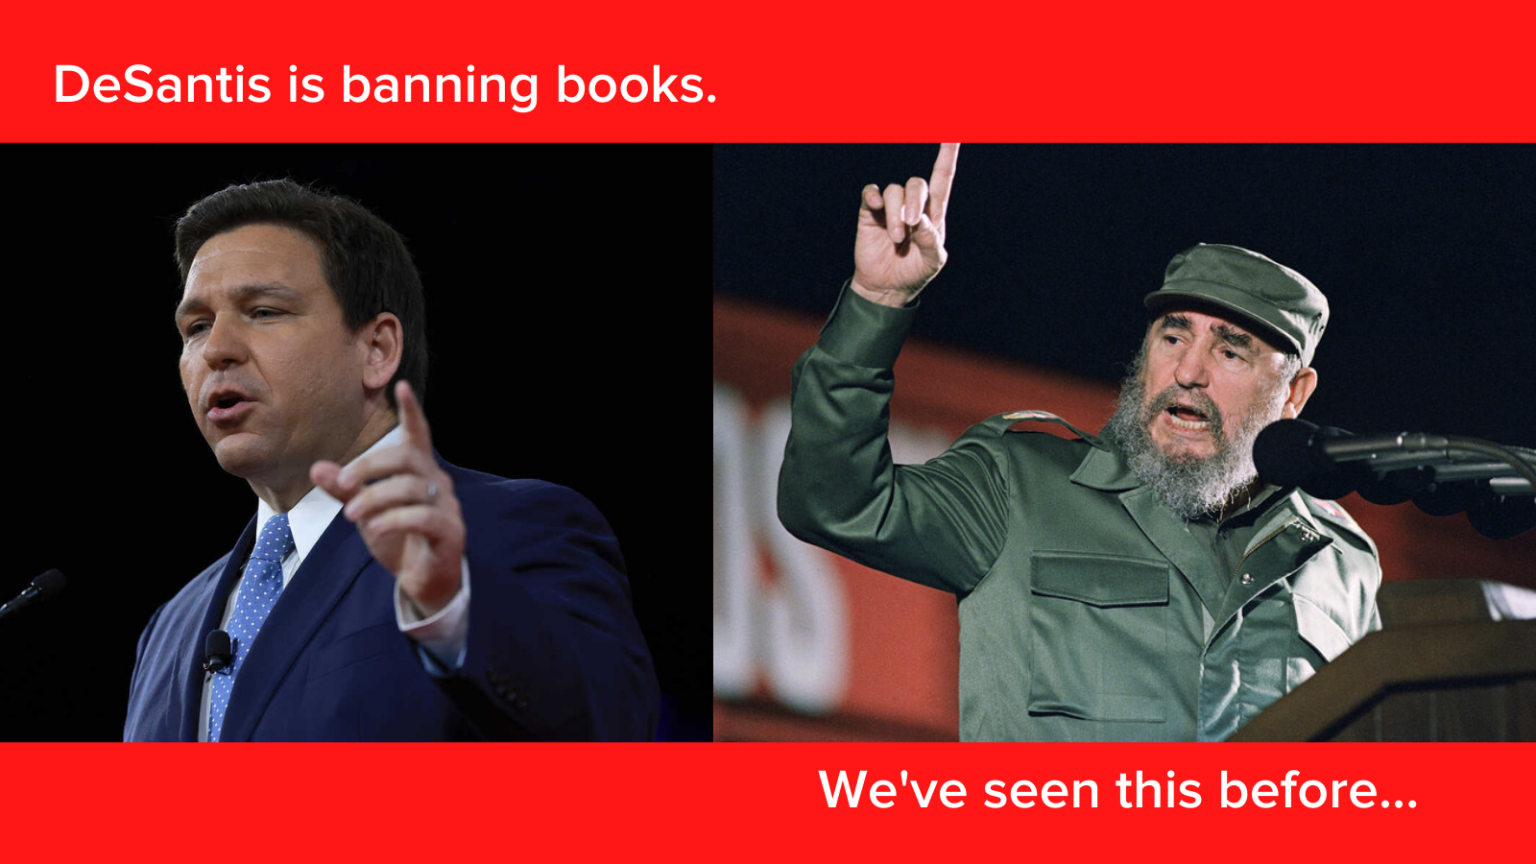 DeSantis like Castro is banning books